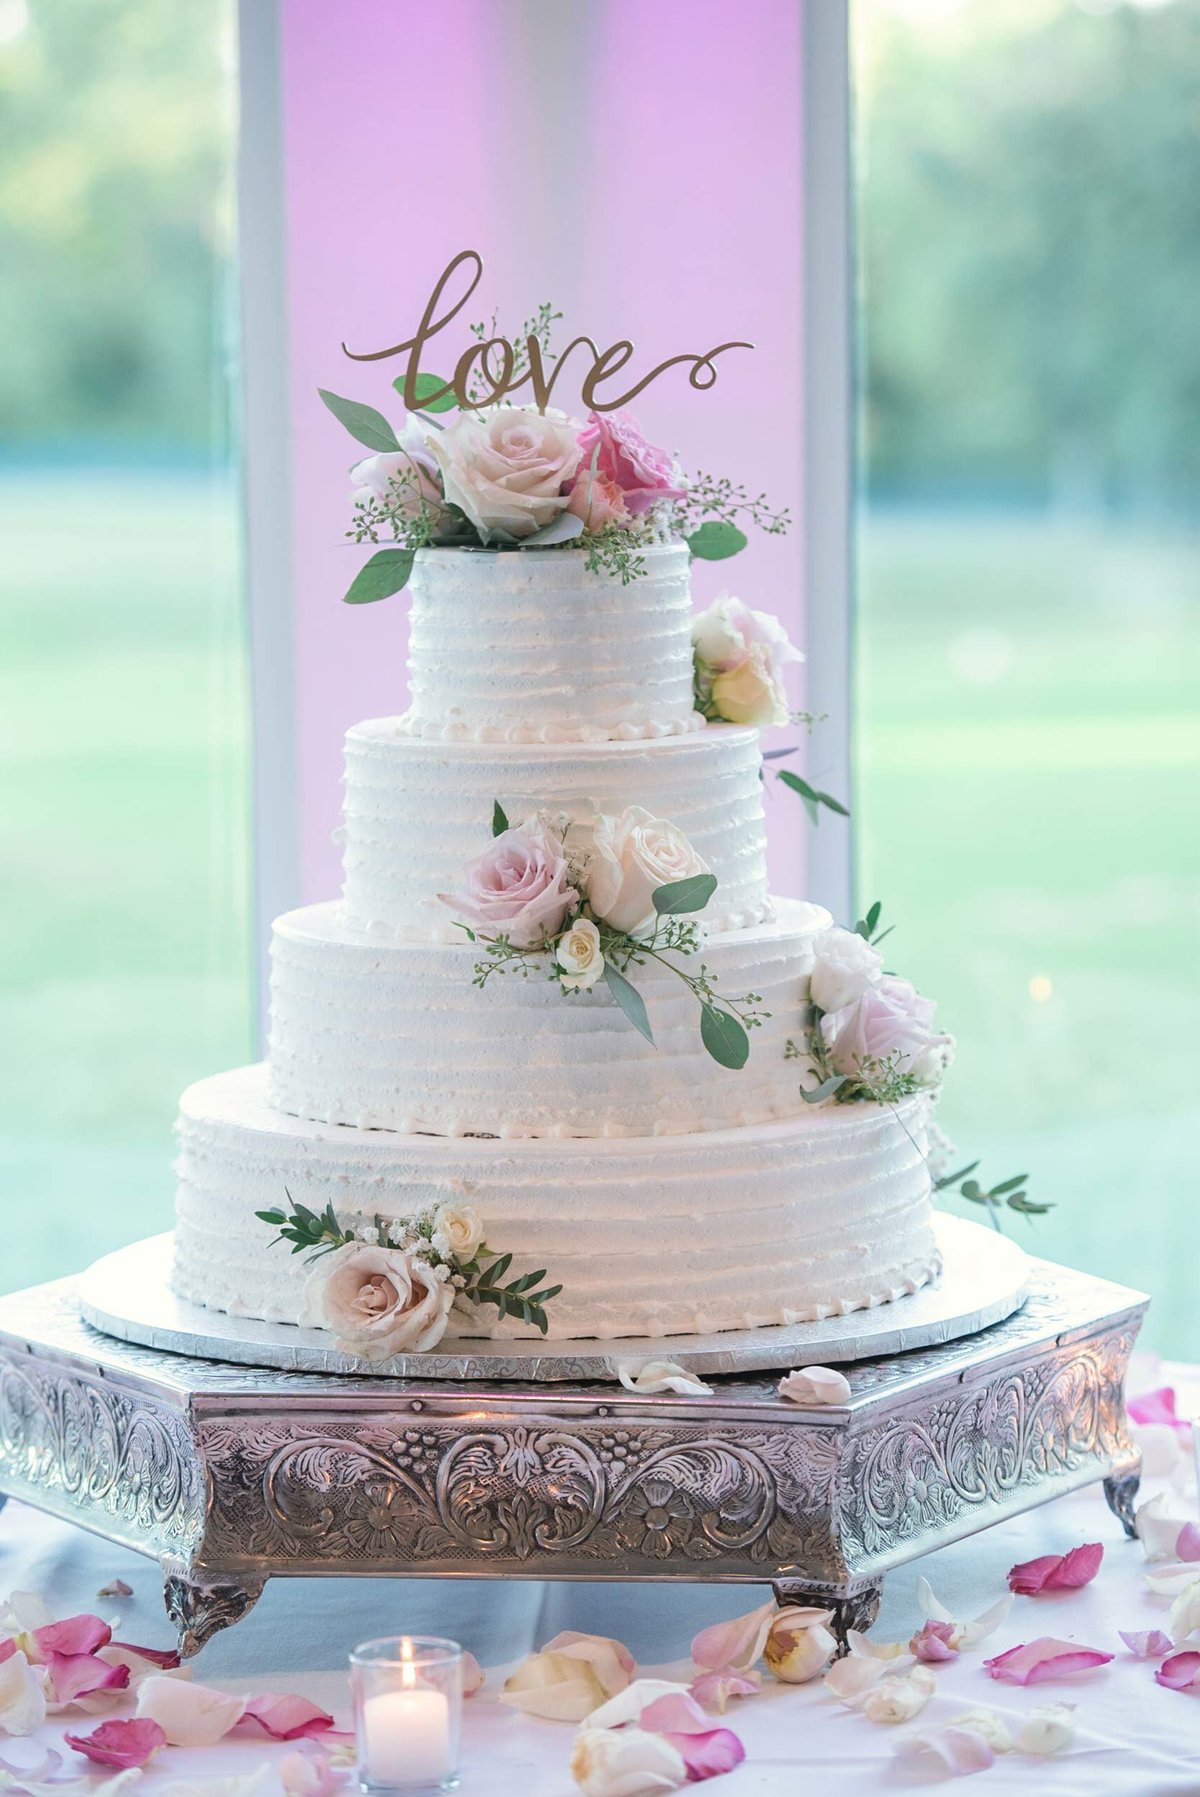 The wedding cake at Stonebridge Country Club